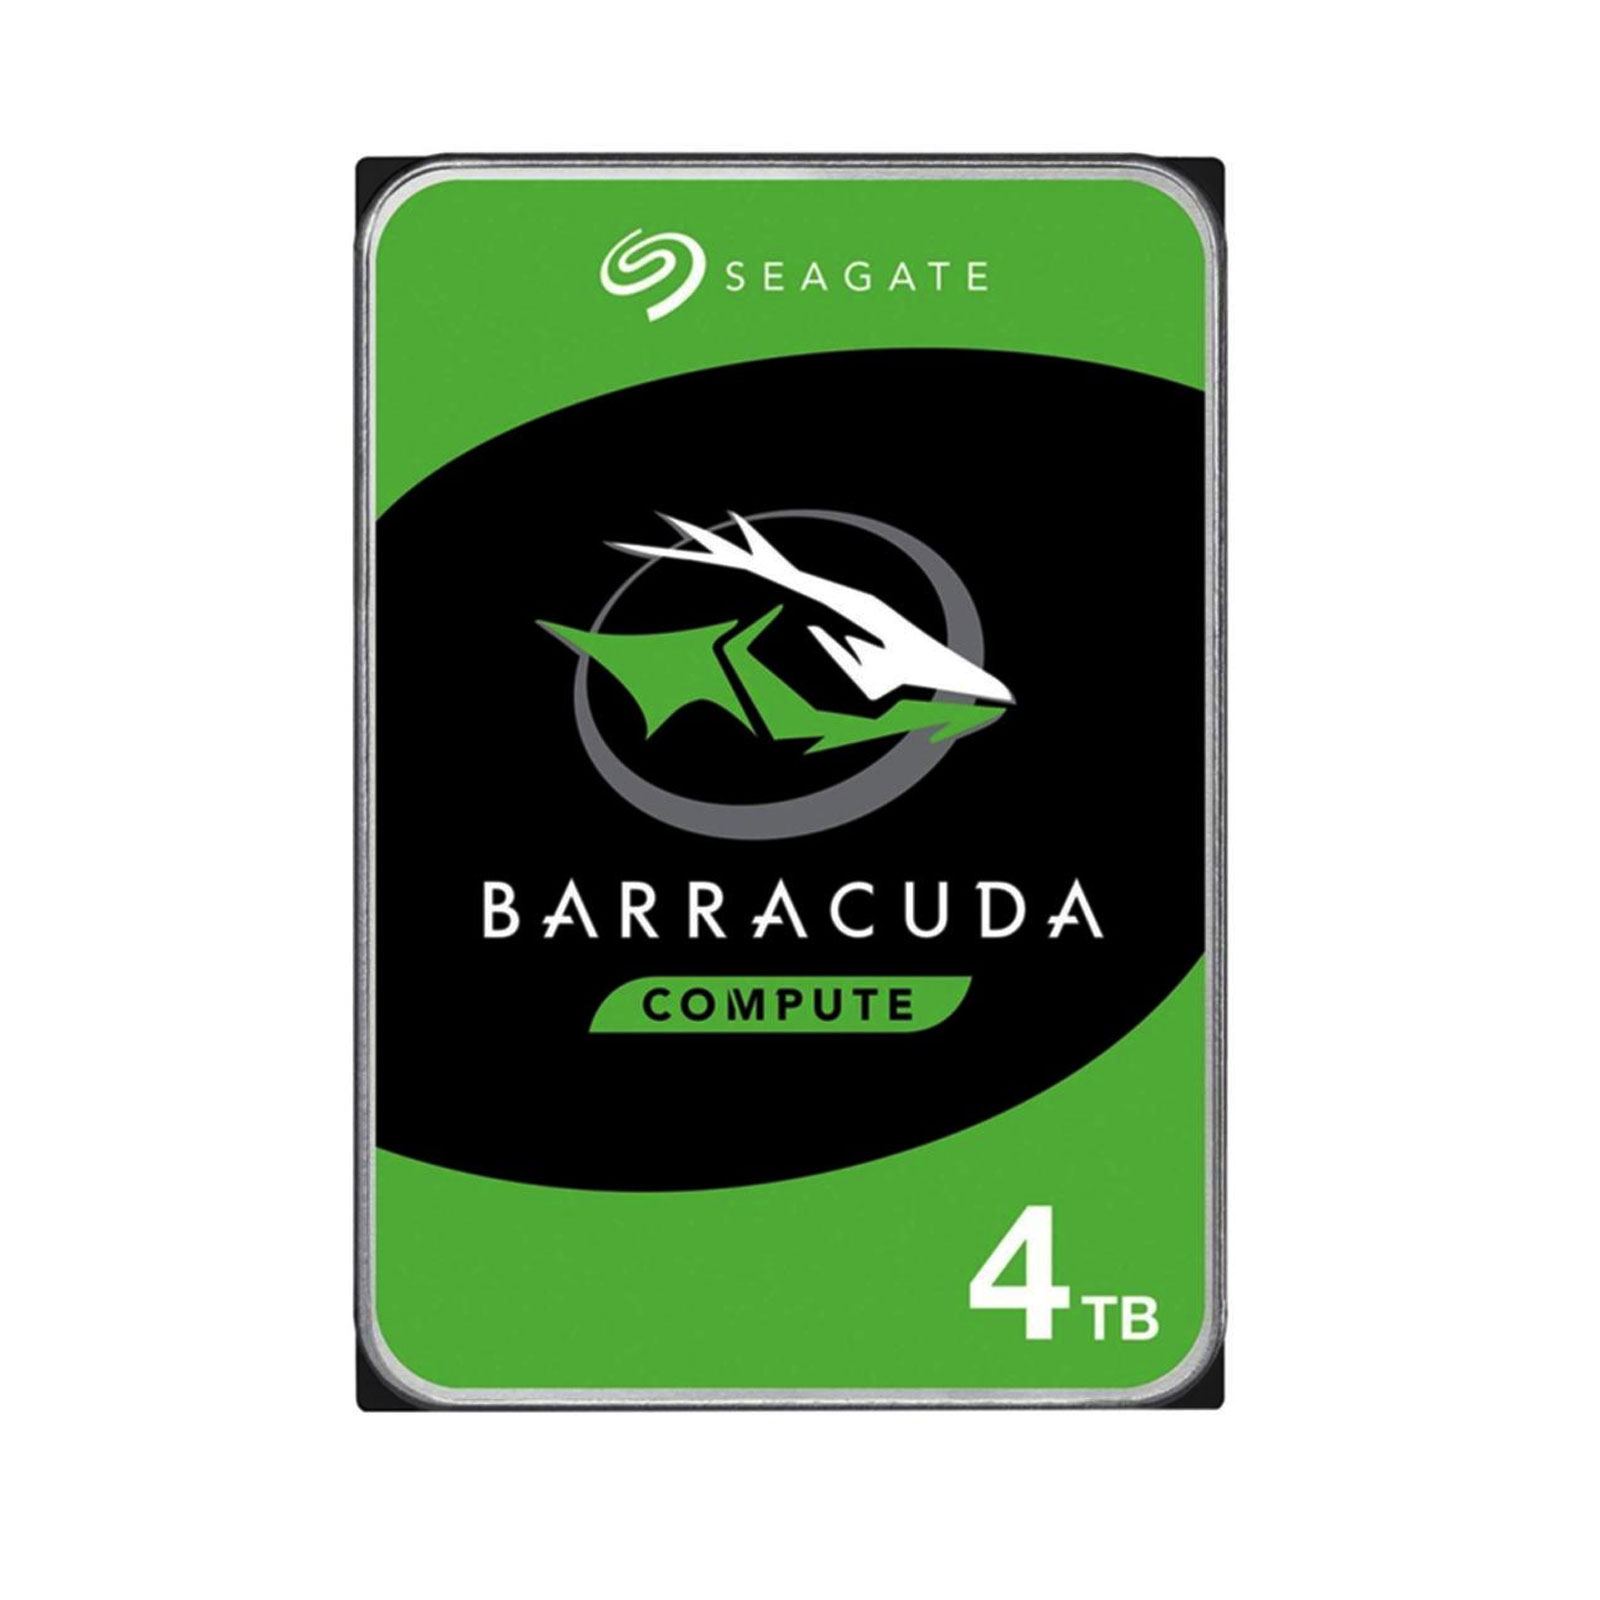 Seagate Barracuda ST4000DM004 4TB Sata III (D) Interne HDD-Festplatte